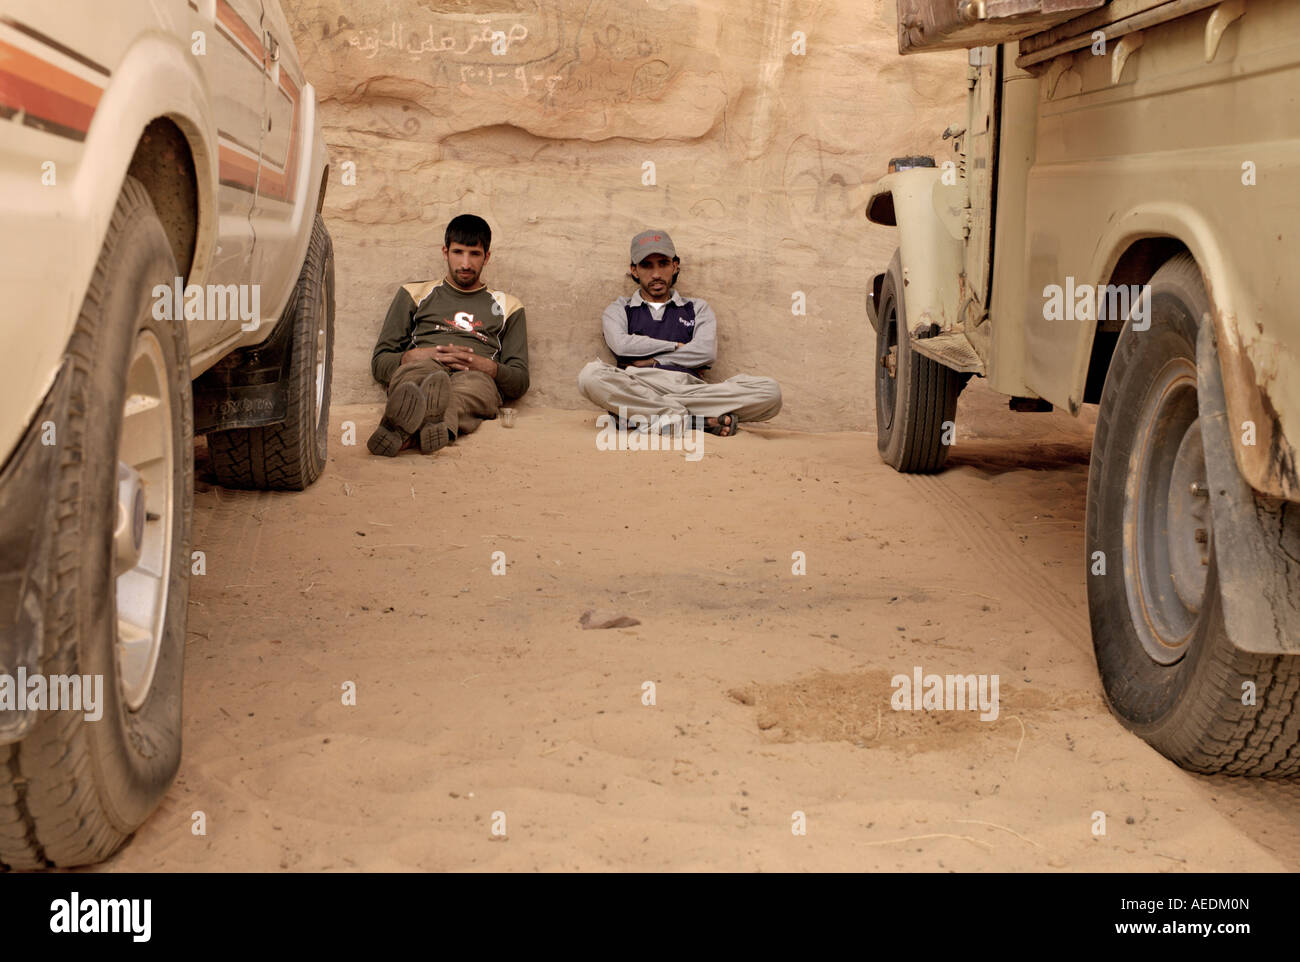 Two Arabs relaxing in desert Stock Photo